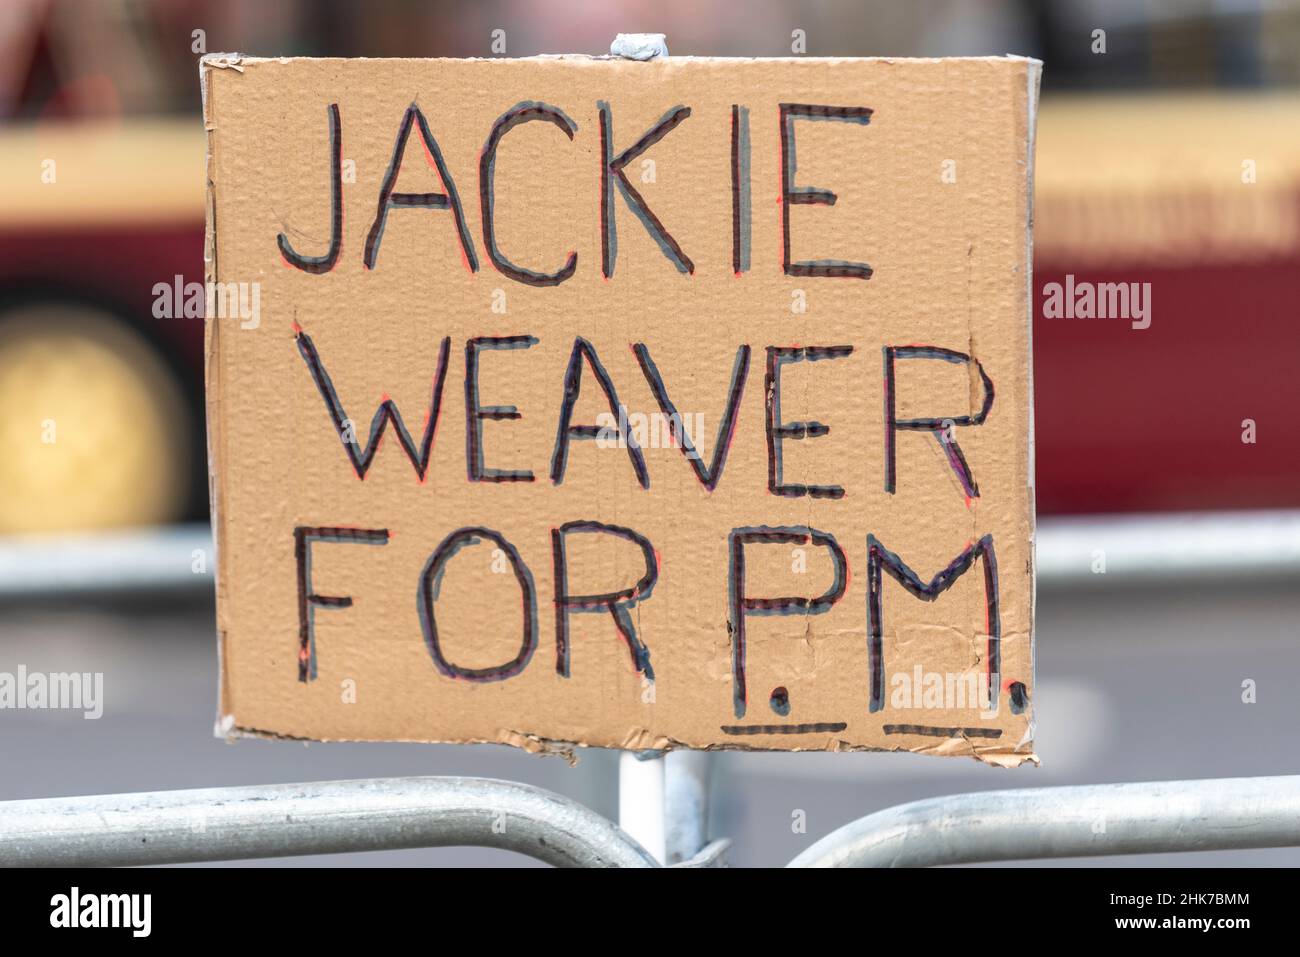 Humorvolles Plakat, das Jackie Weaver zum Premierminister aufruft Stockfoto